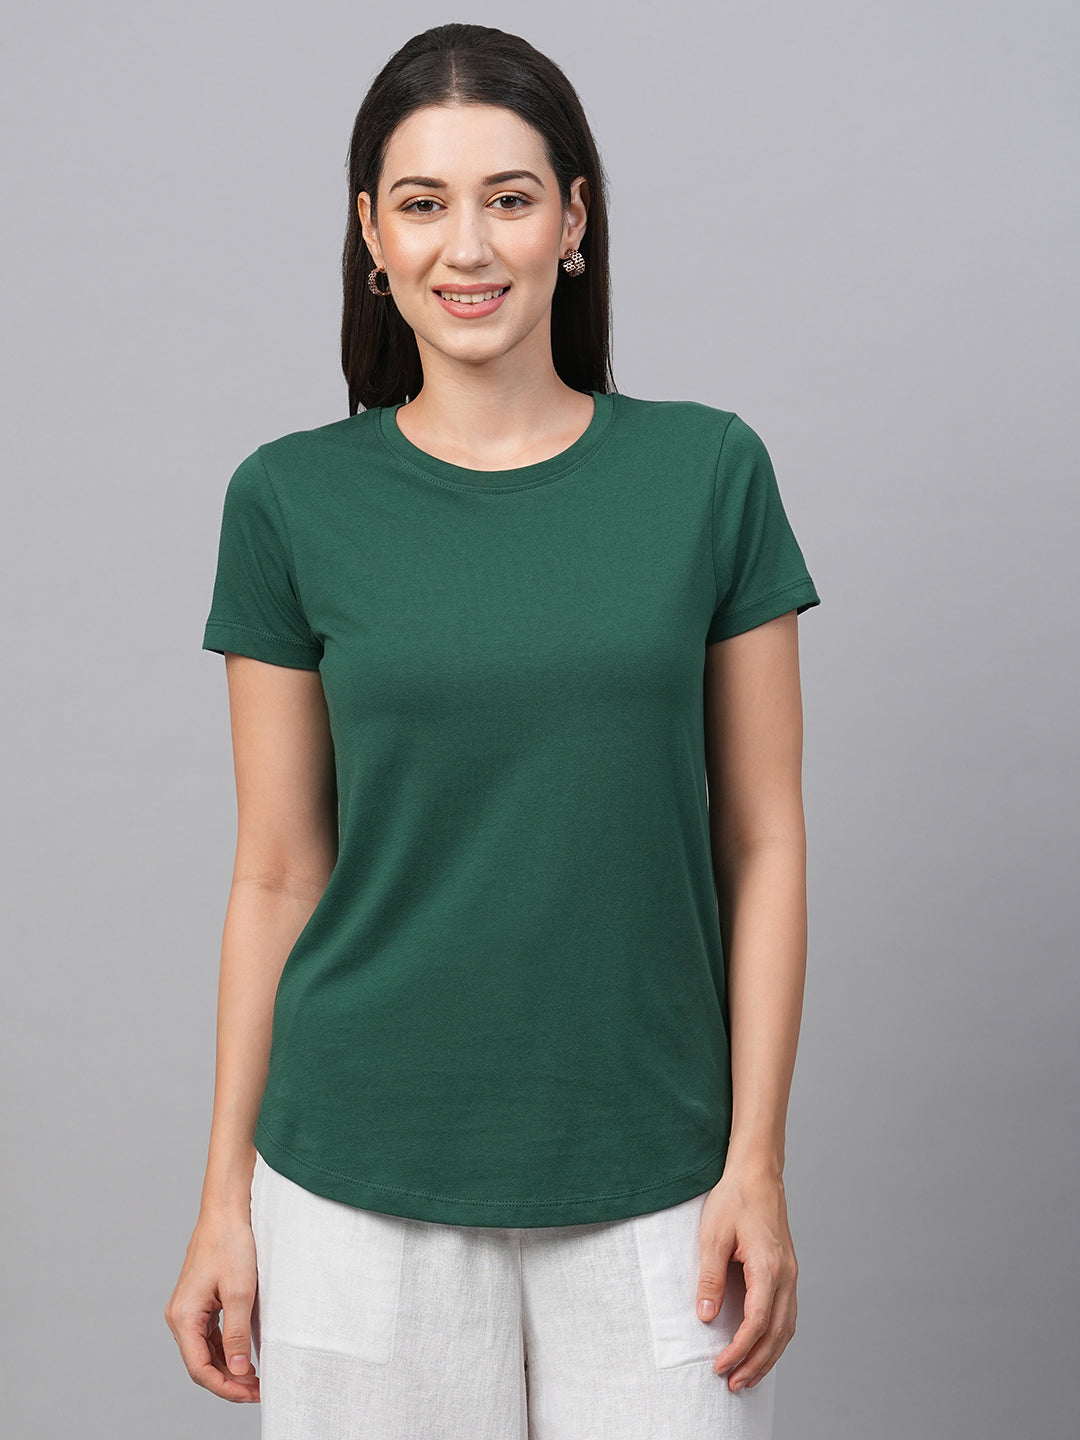 Women's Green Cotton Slim Fit Tshirt